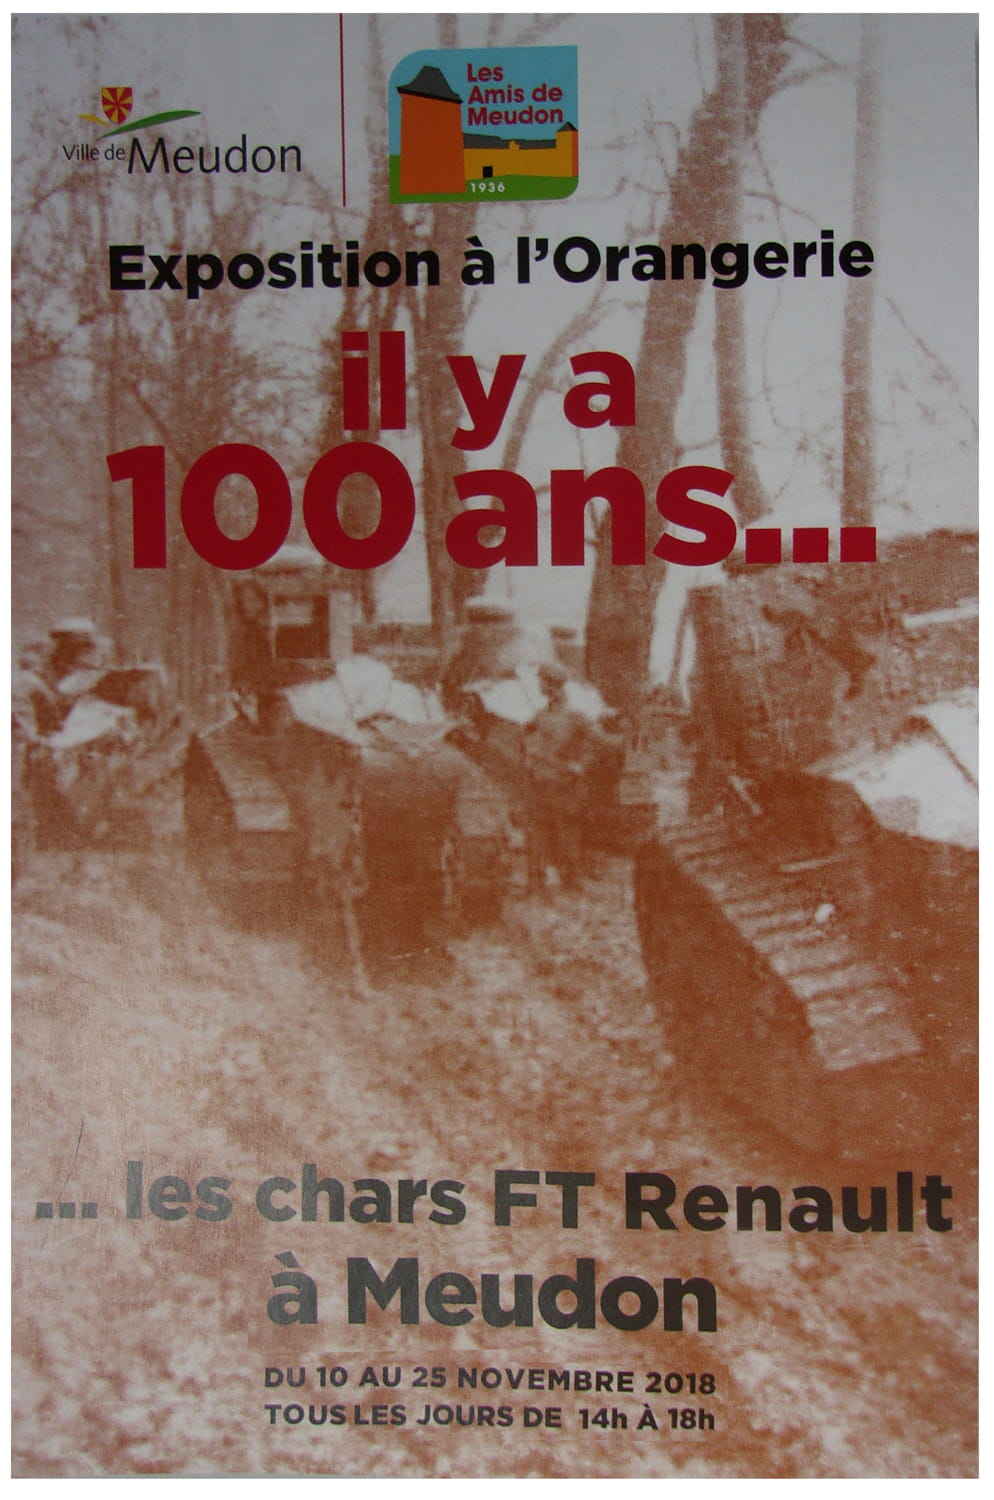 181110 - Expo chars à Meudon (1a)-min.jpg